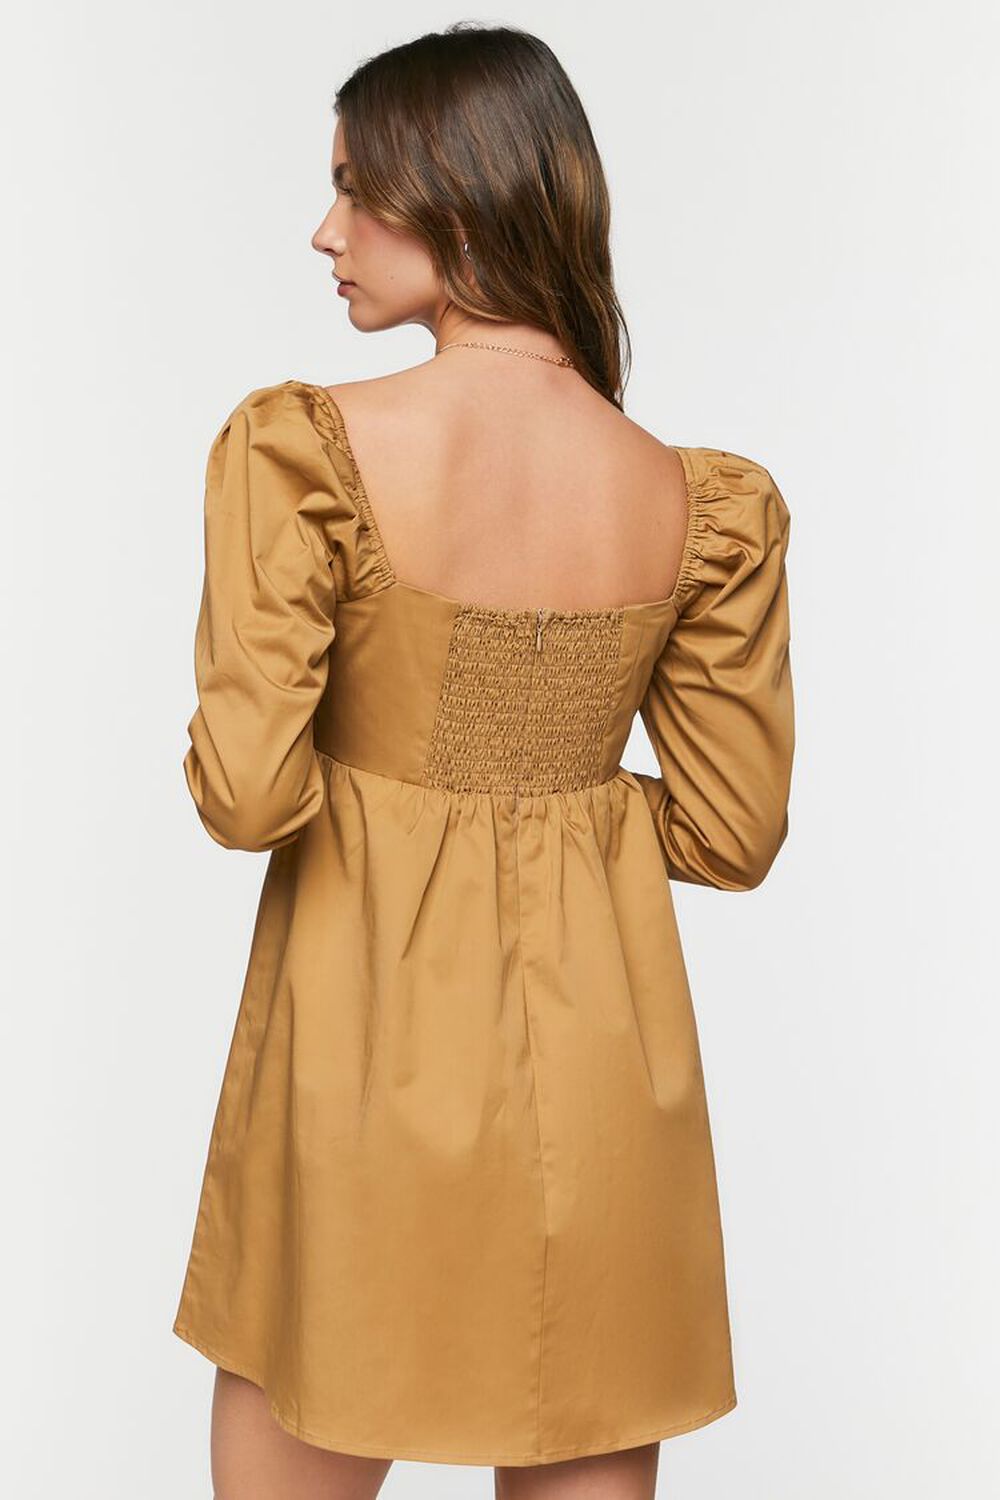 CLAY Long-Sleeve Babydoll Mini Dress, image 3